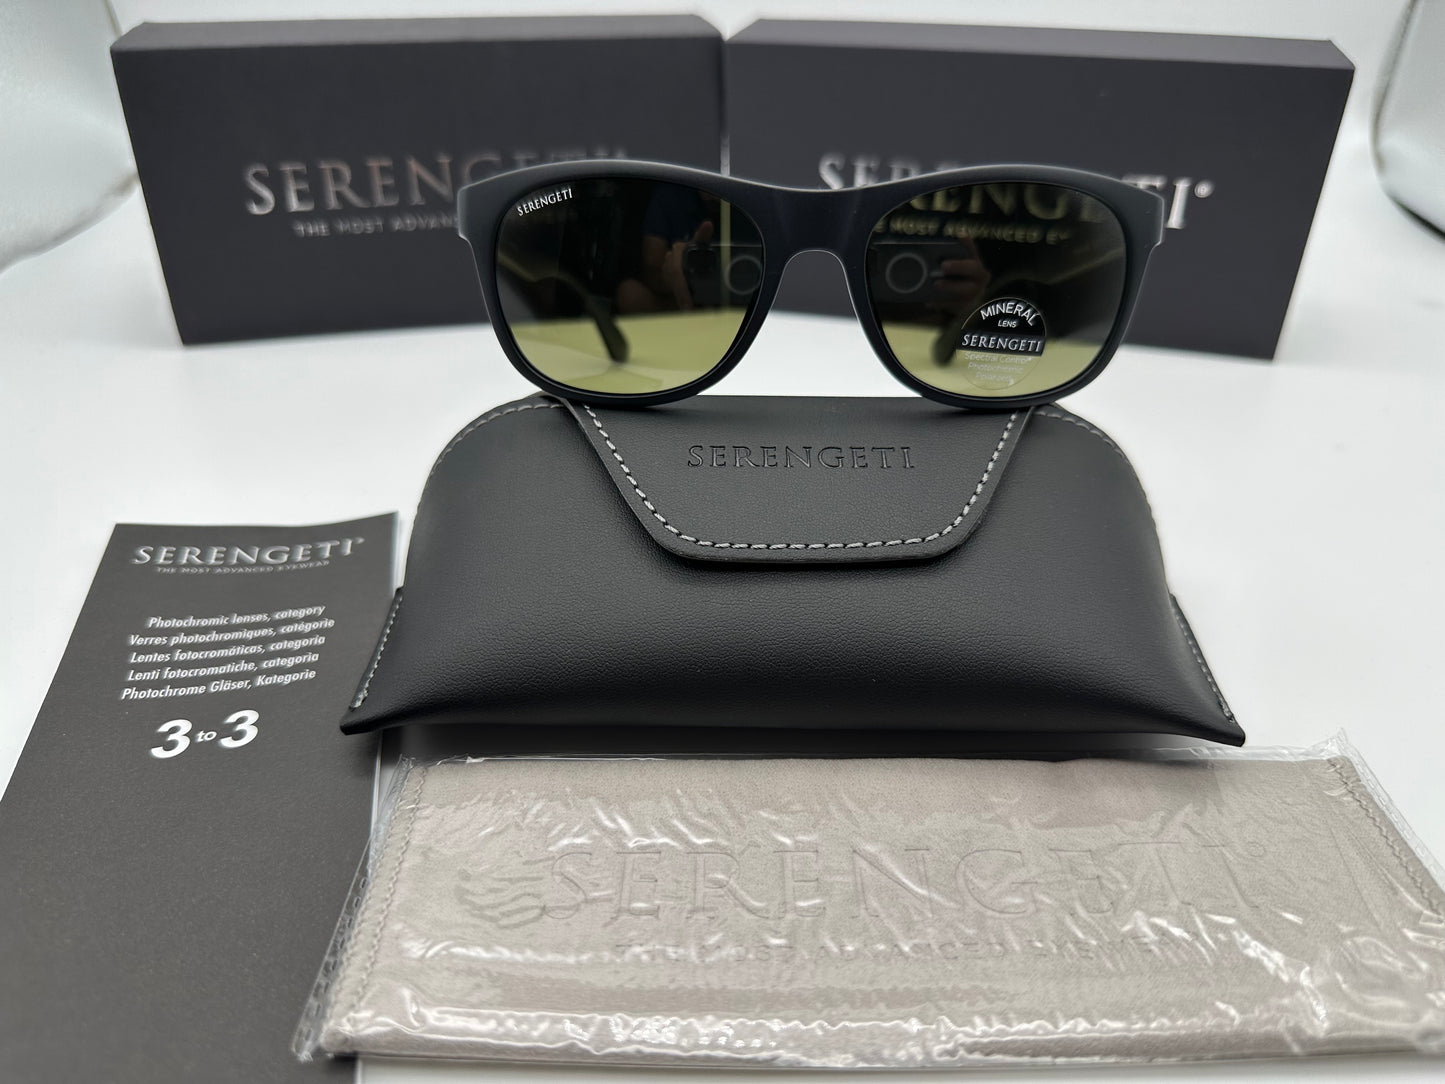 Serengeti Anteo 55mm Matte Black Polarized 555 nm Mineral Glass Photochromic Lens made in Italy